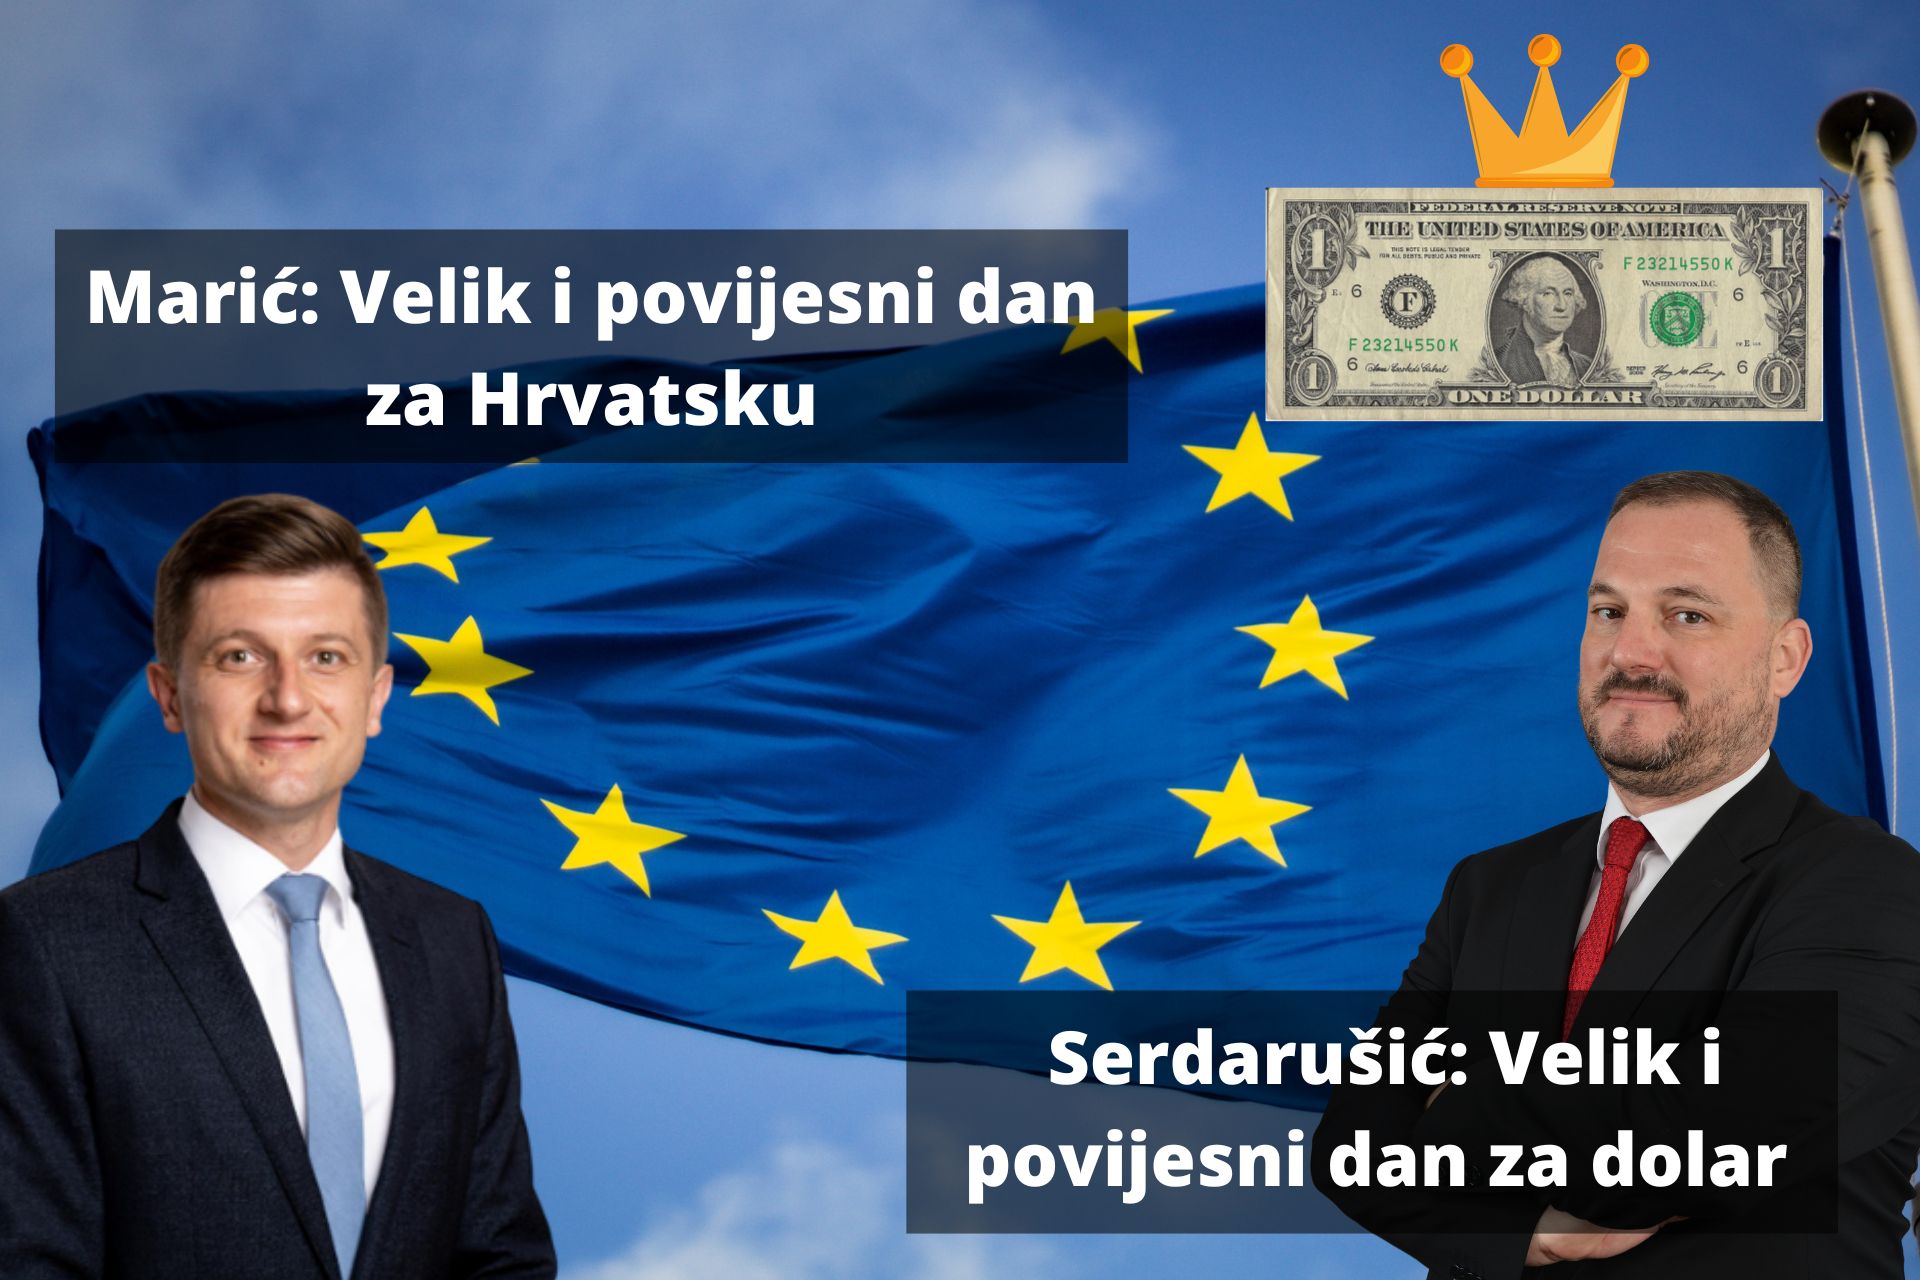 Hrvatski ulazak u eurozonu